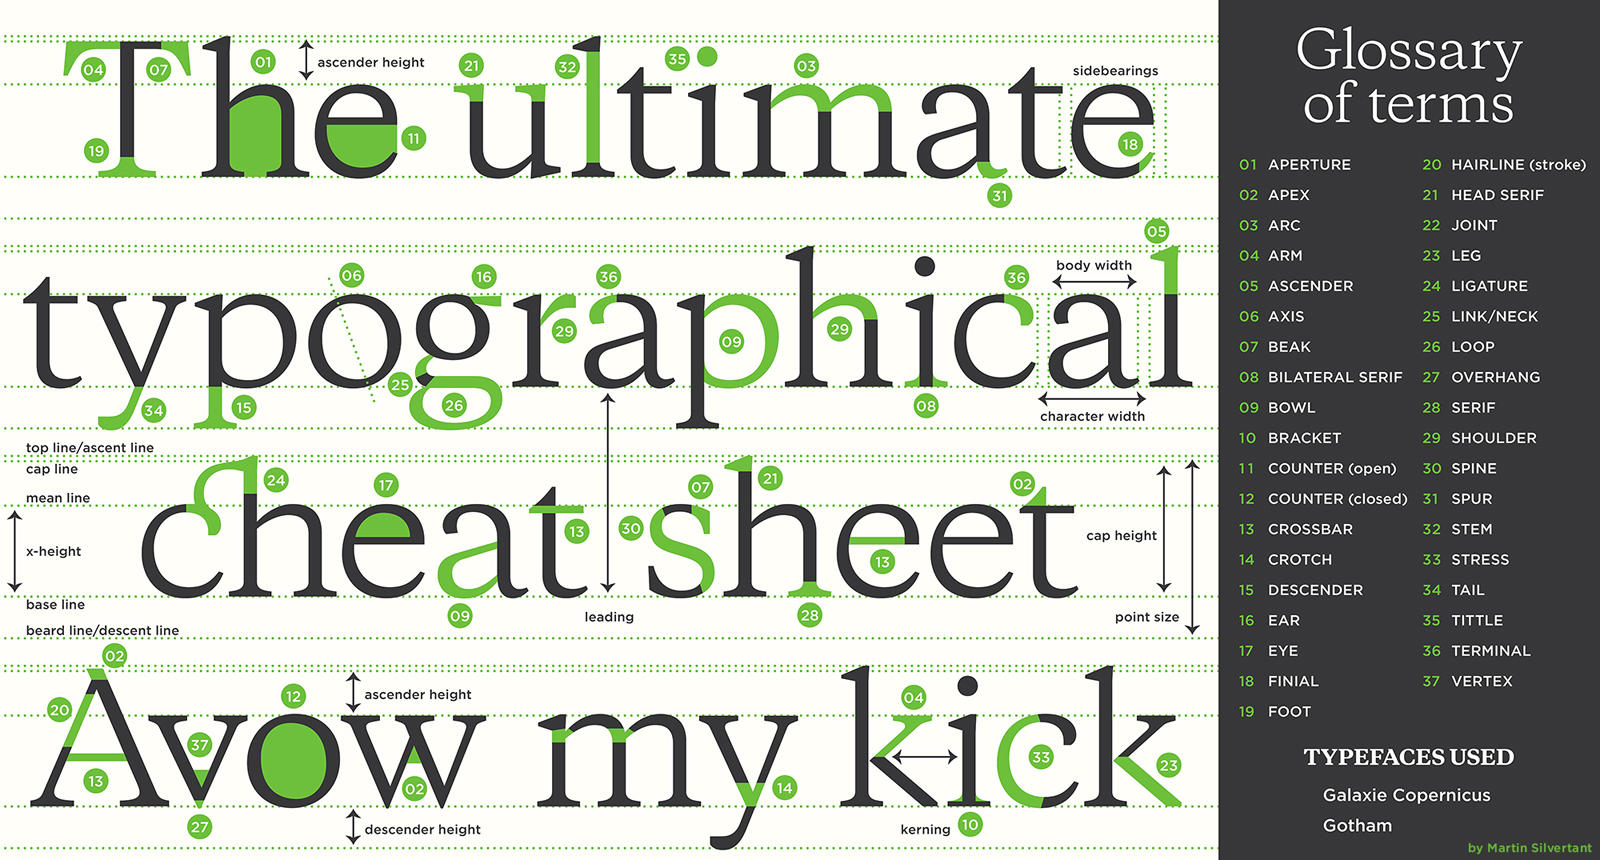 Anatomy of typography by MartinSilvertant on DeviantArt